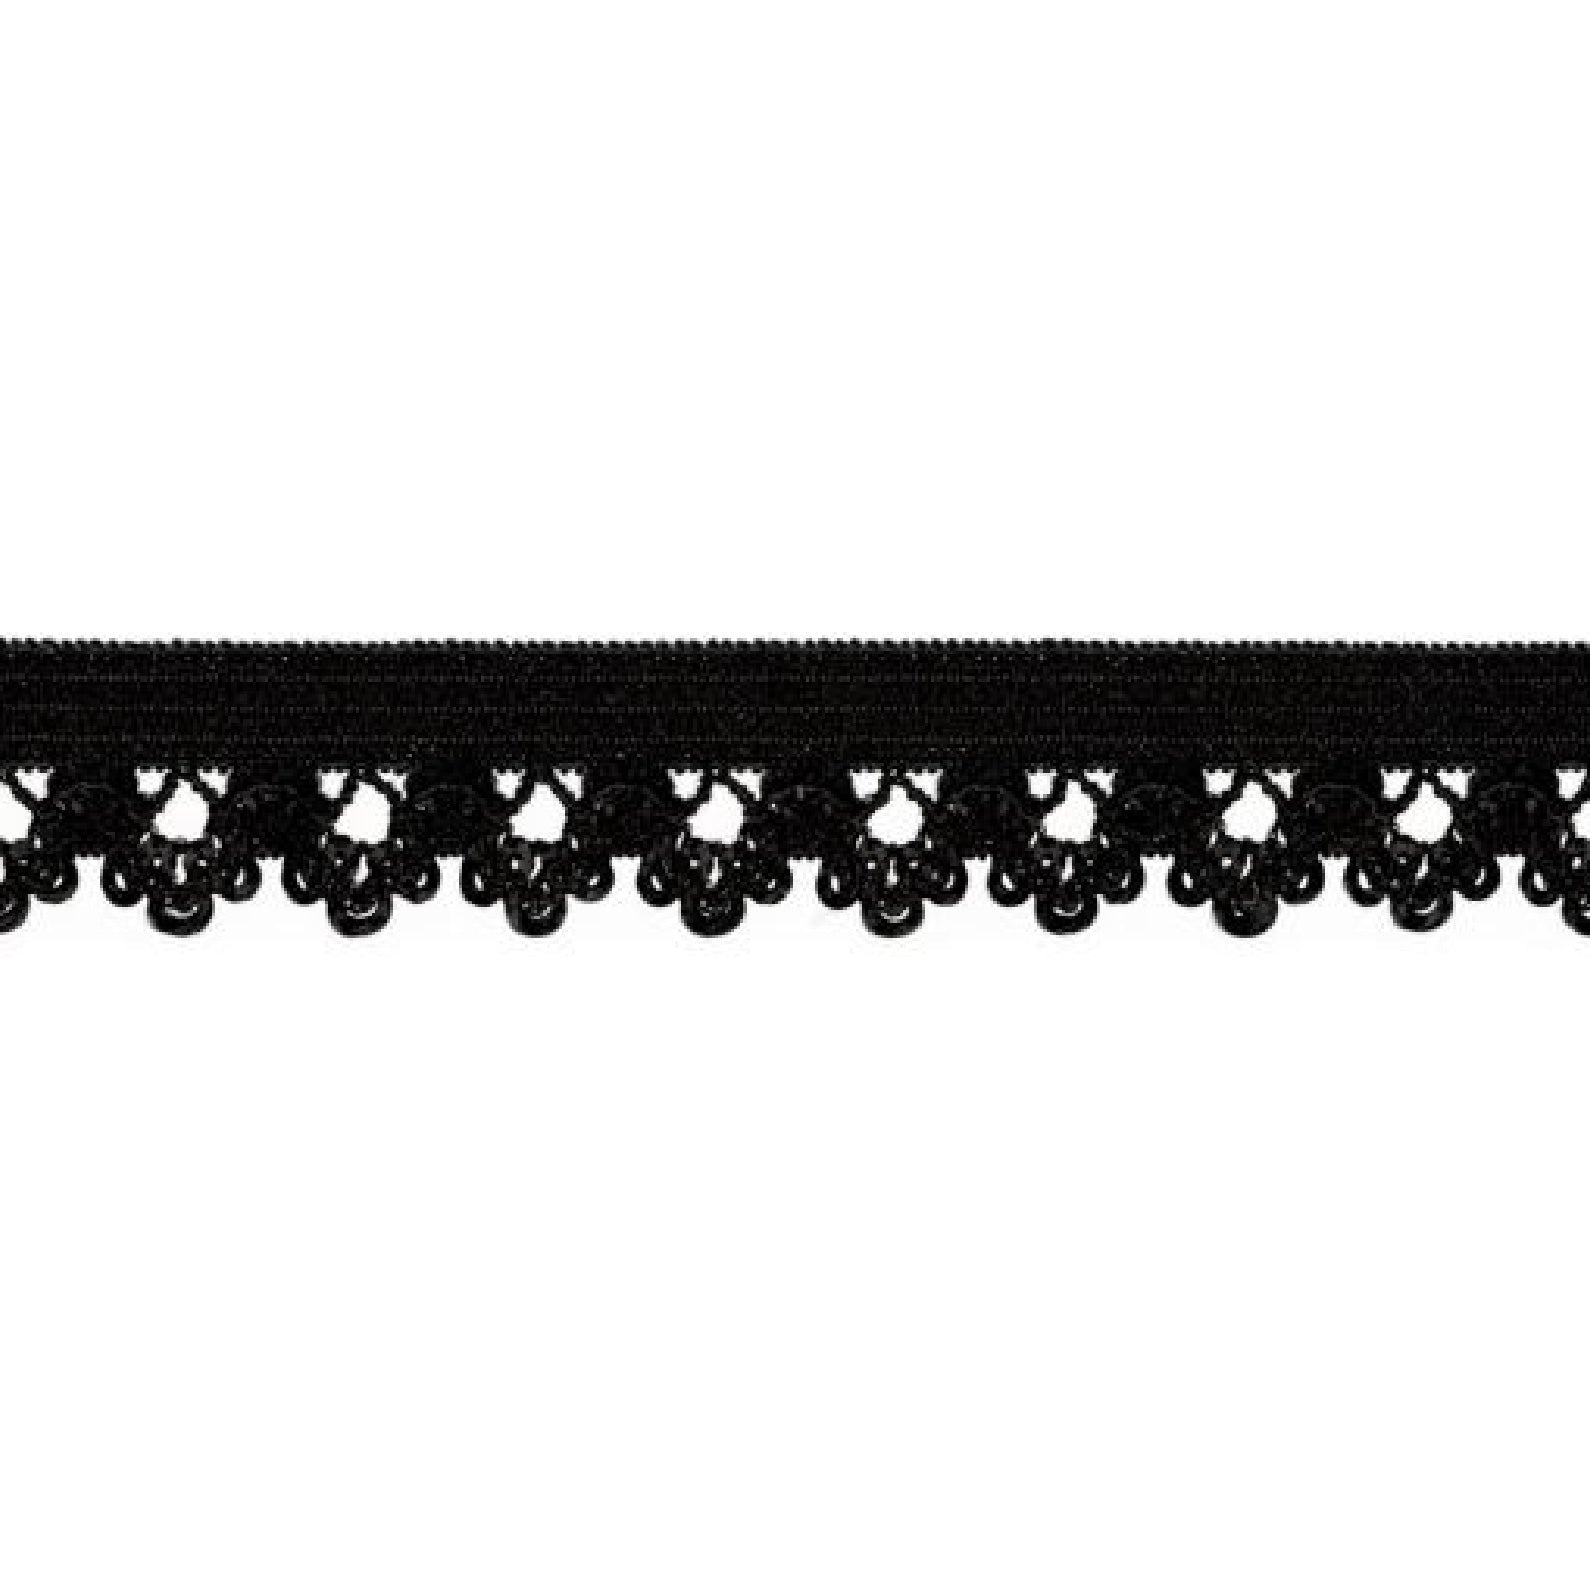 Black - 13mm elastic lace